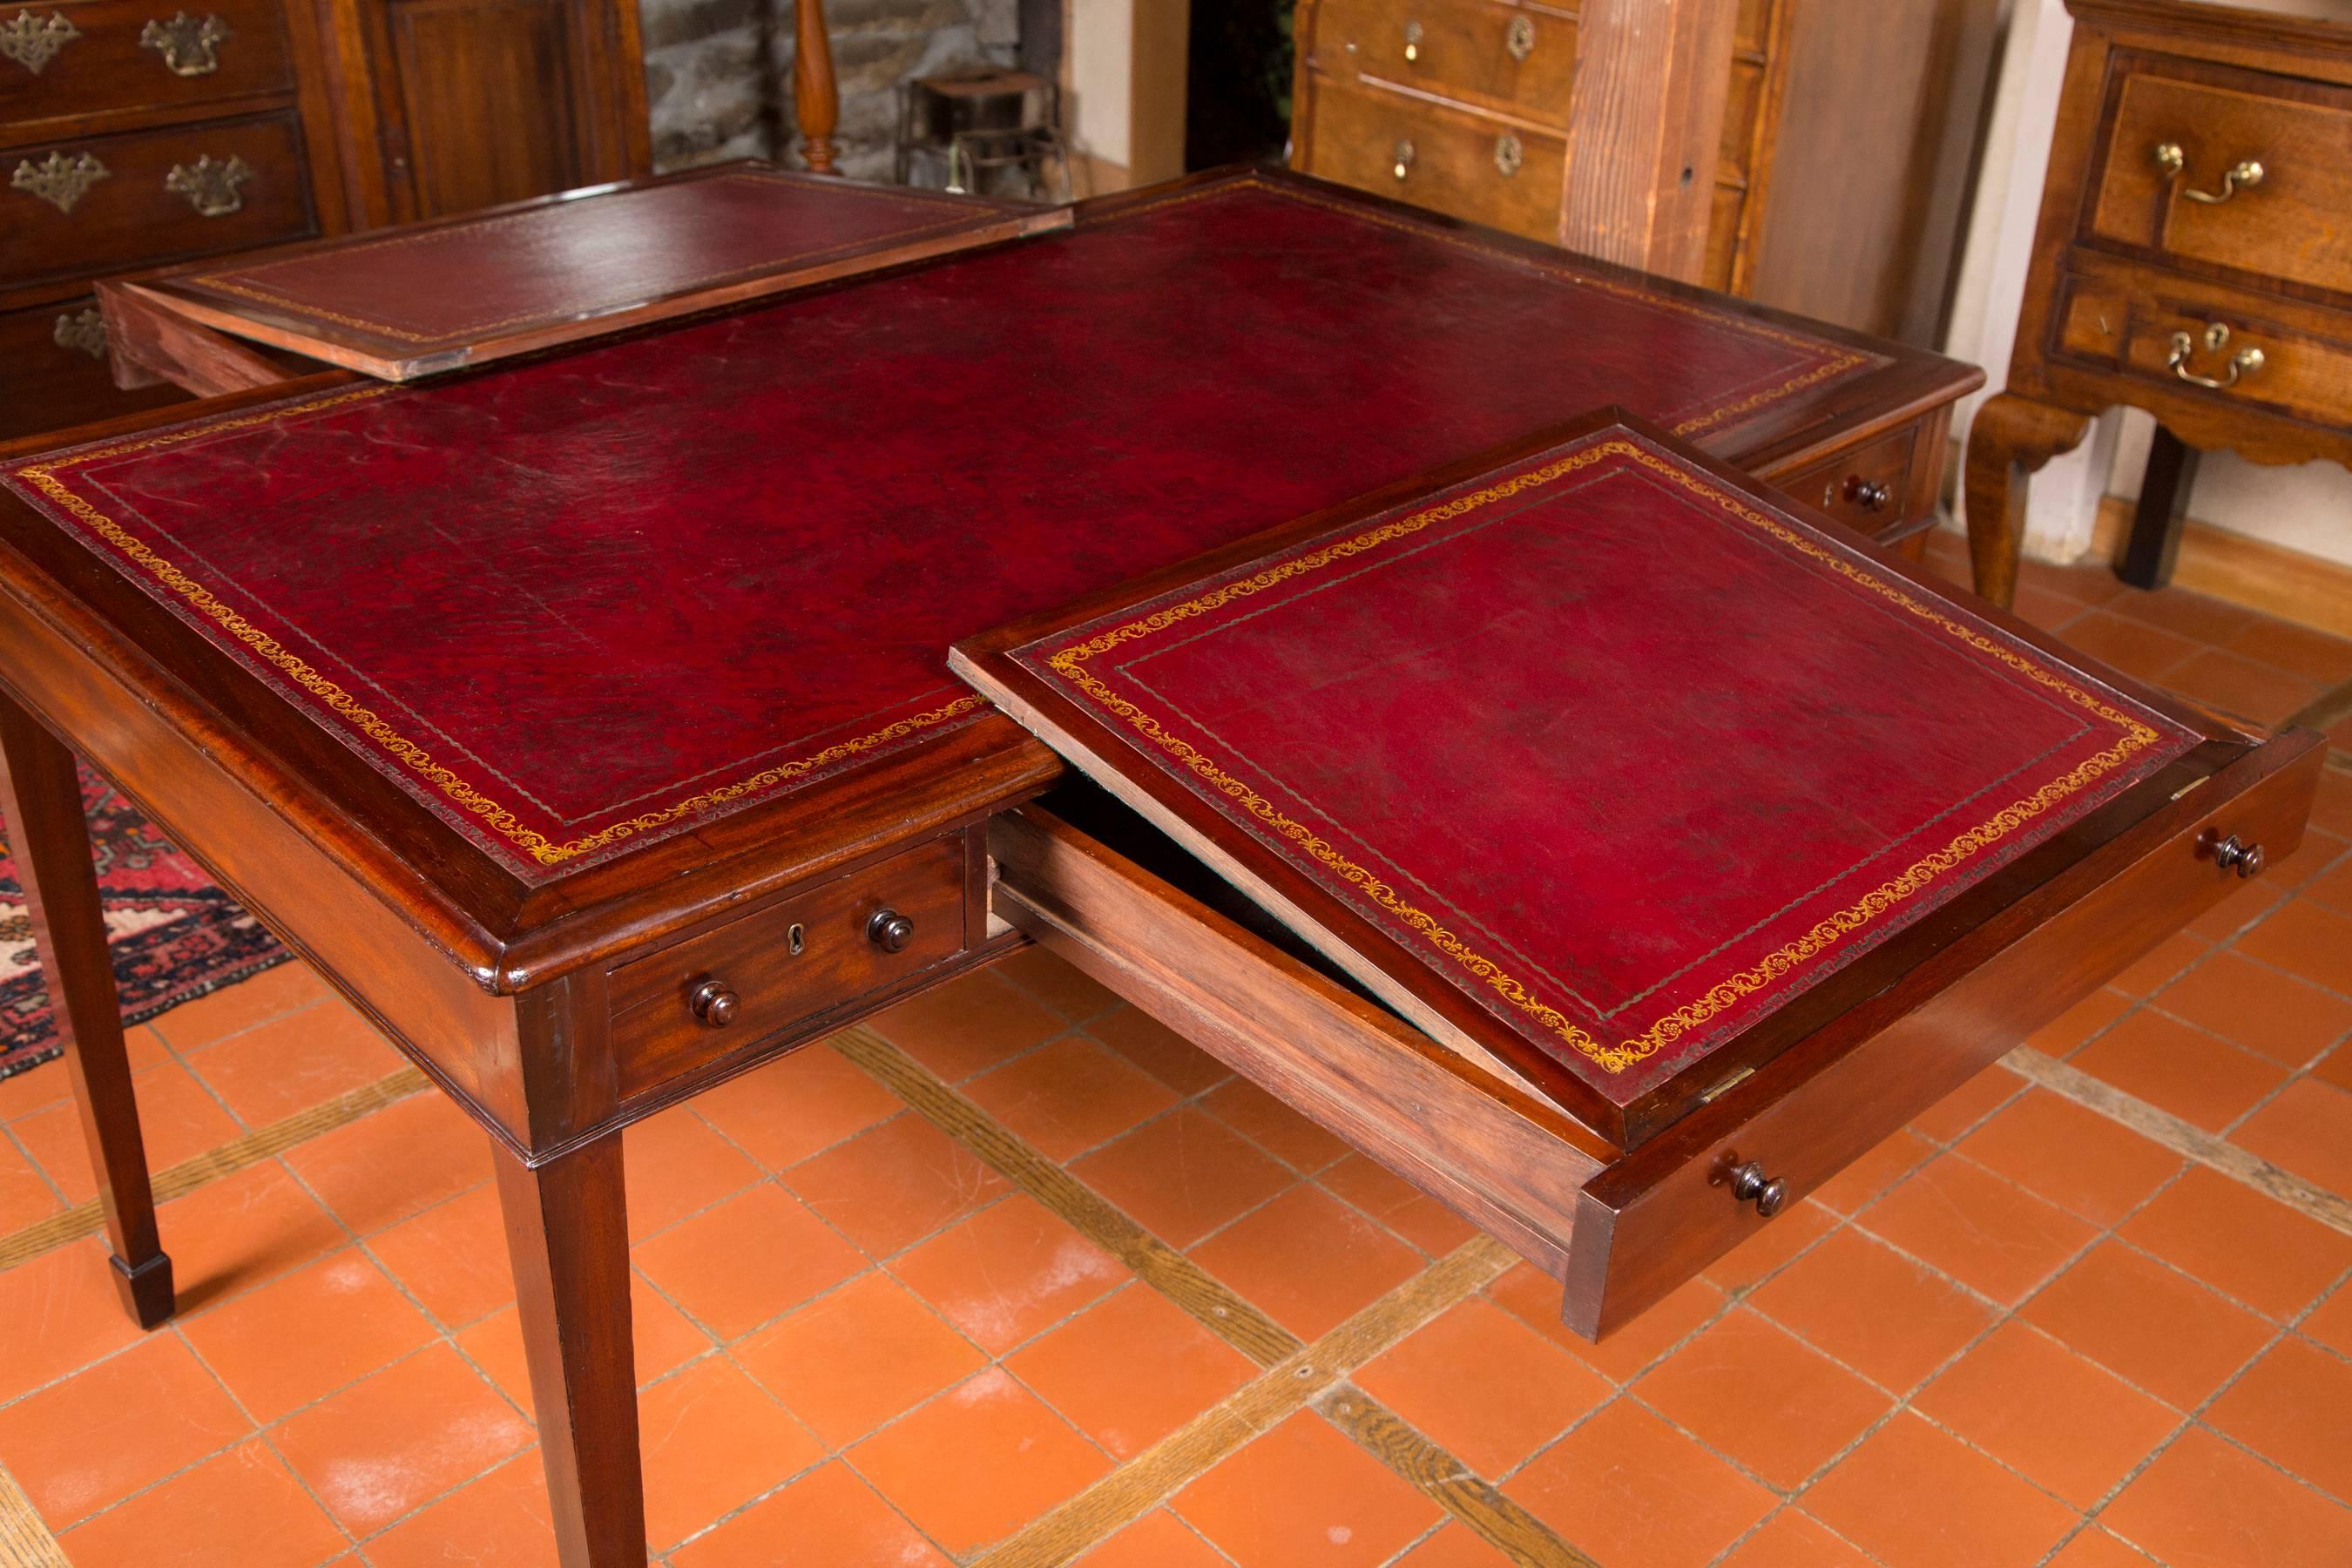 19th Century Mahogany Writing Table / Desk with Dual Slopes